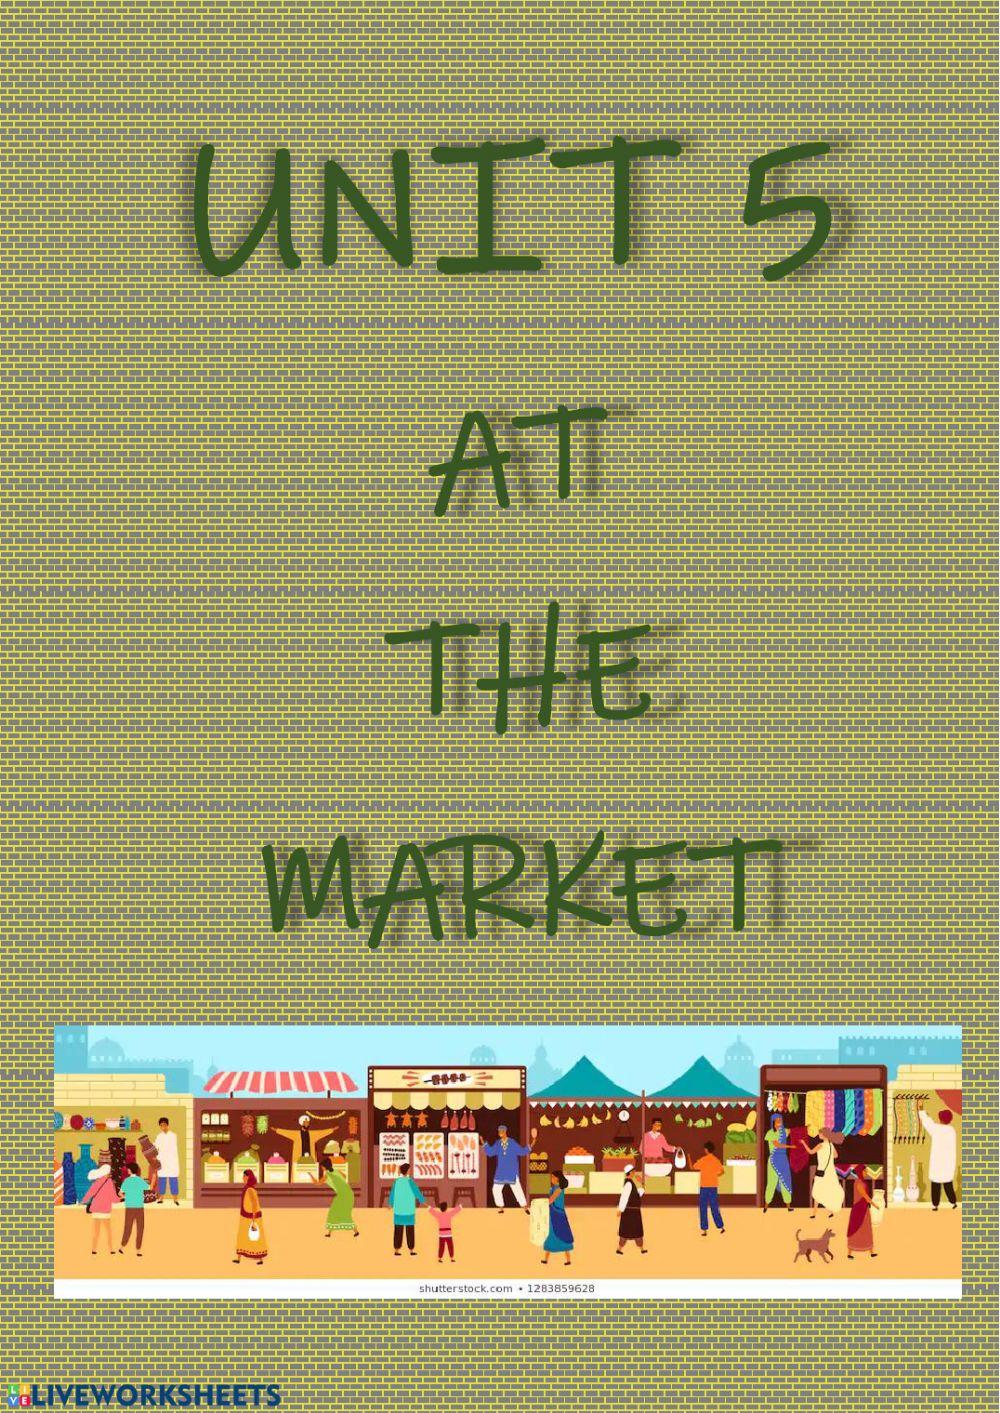 Unit 5-At the market